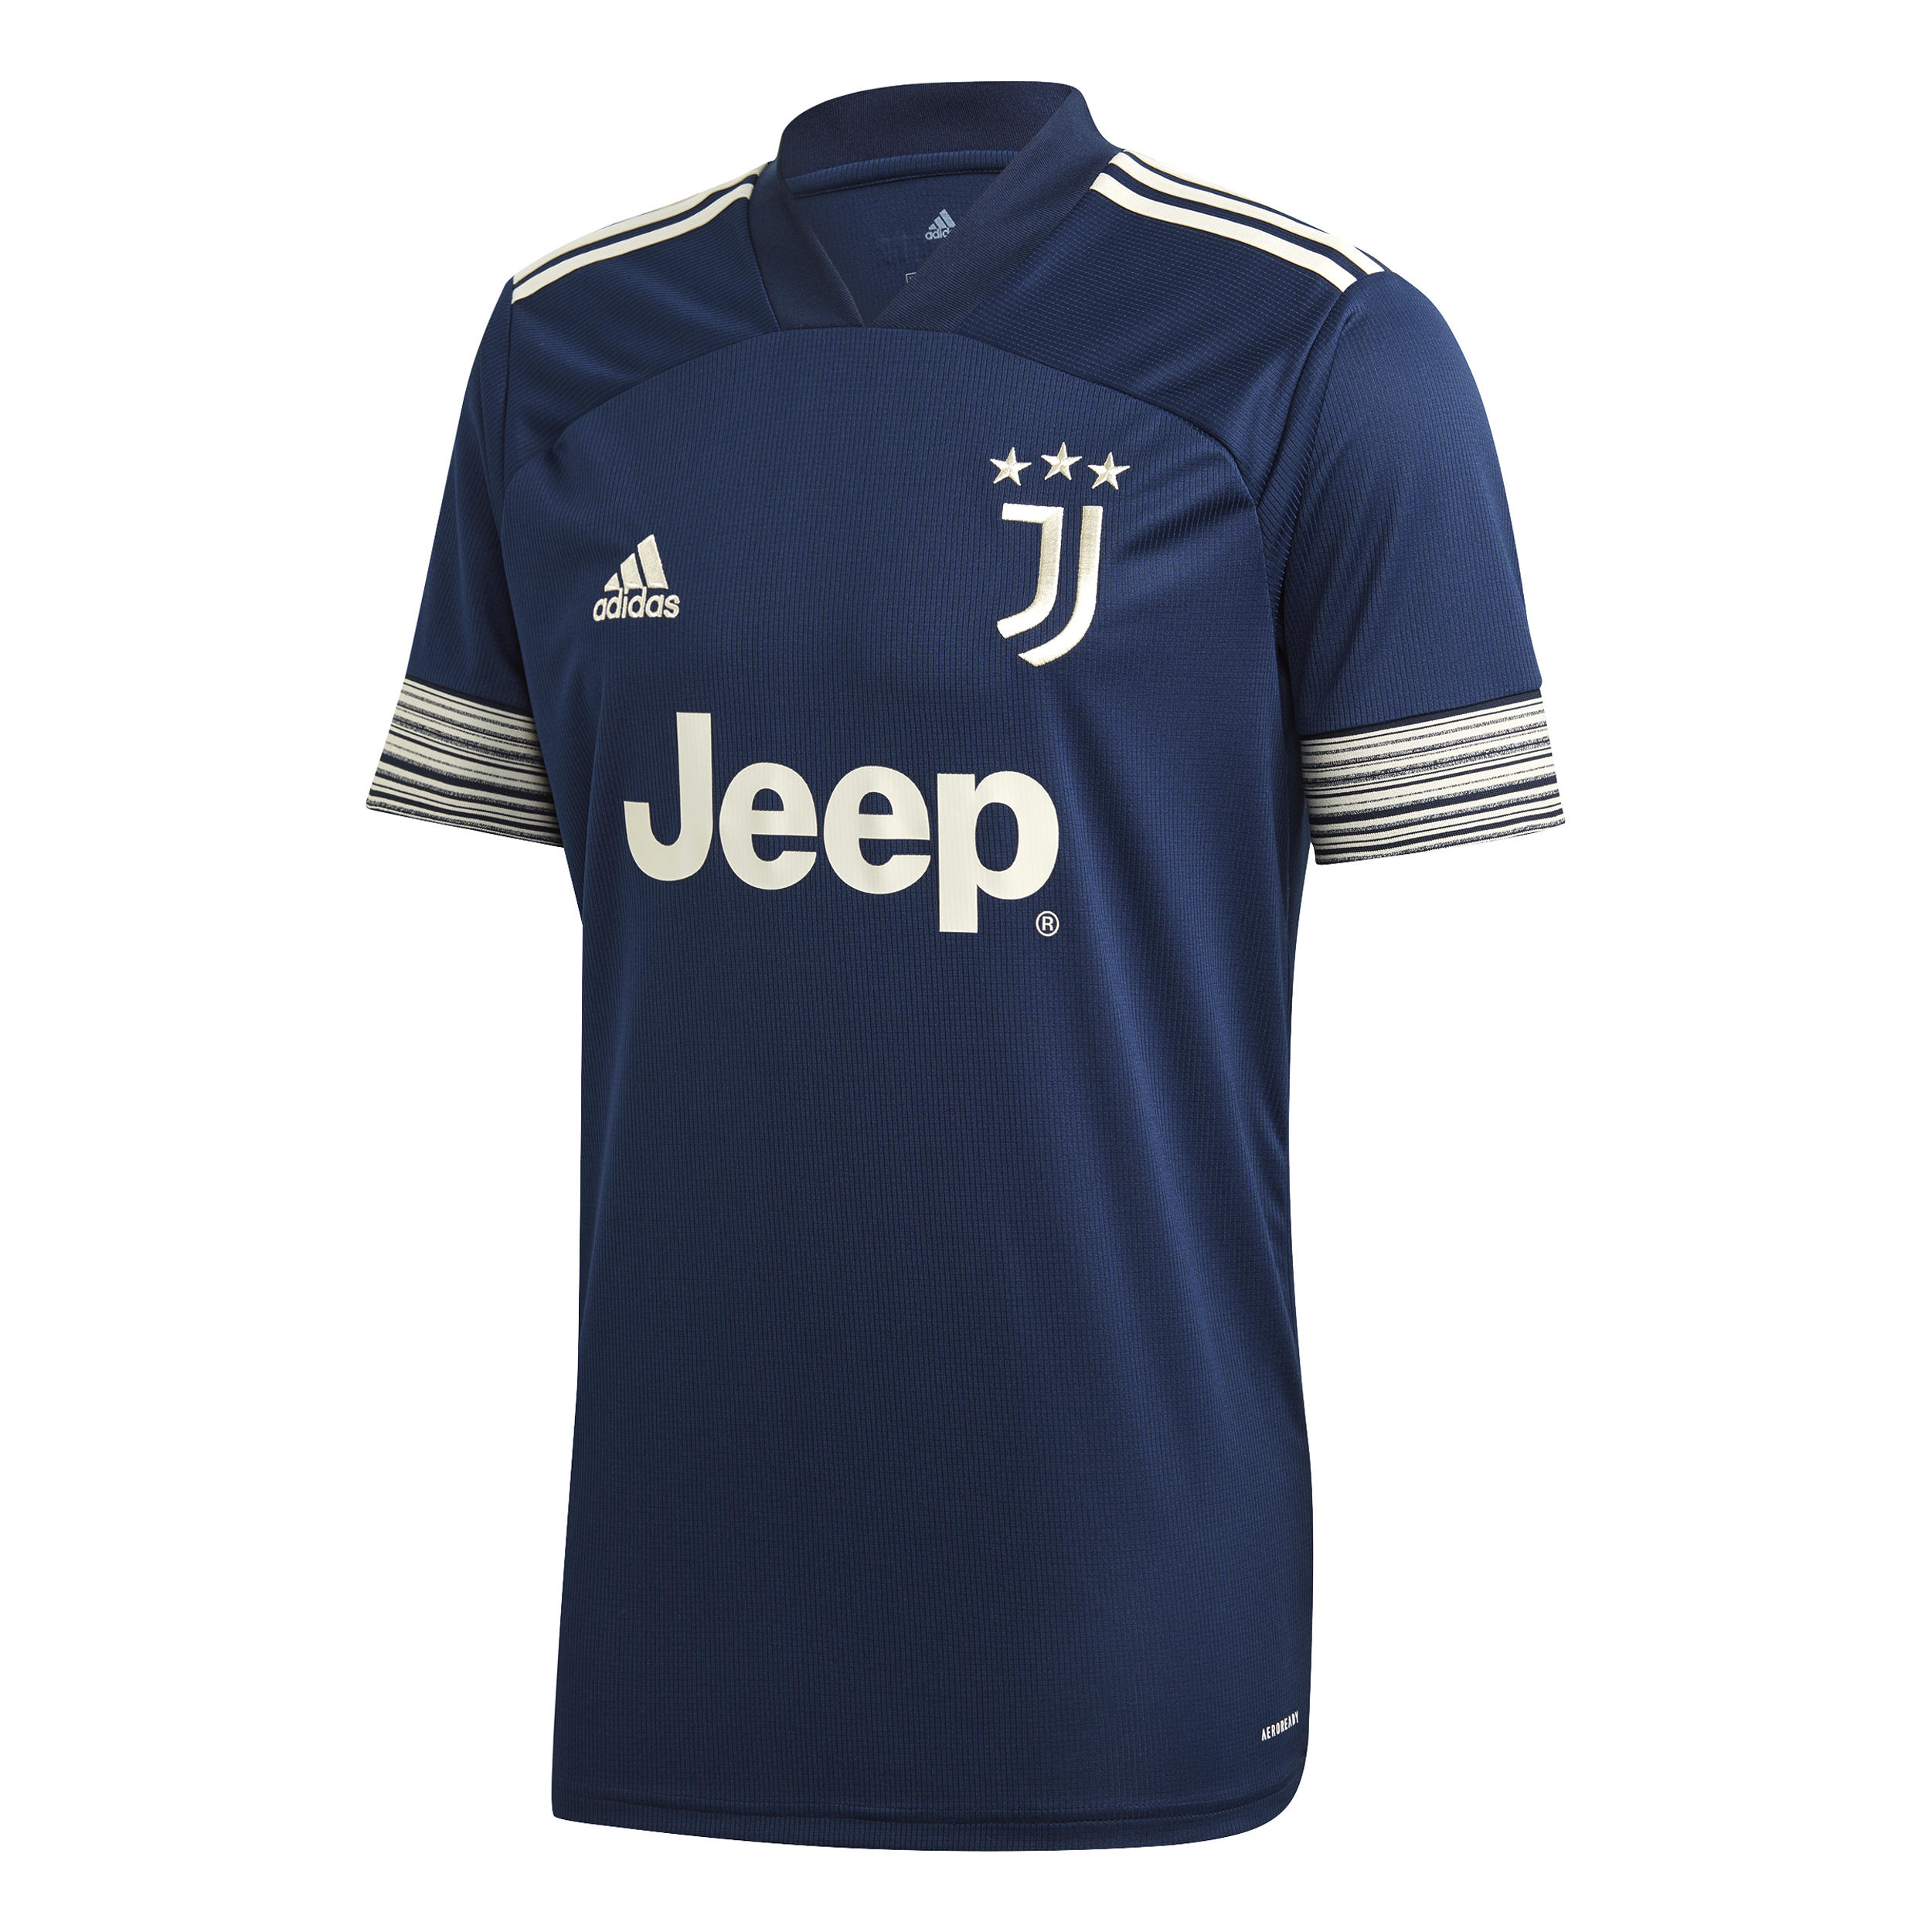 Tricou Fotbal Juventus Adidas la Reducere poza